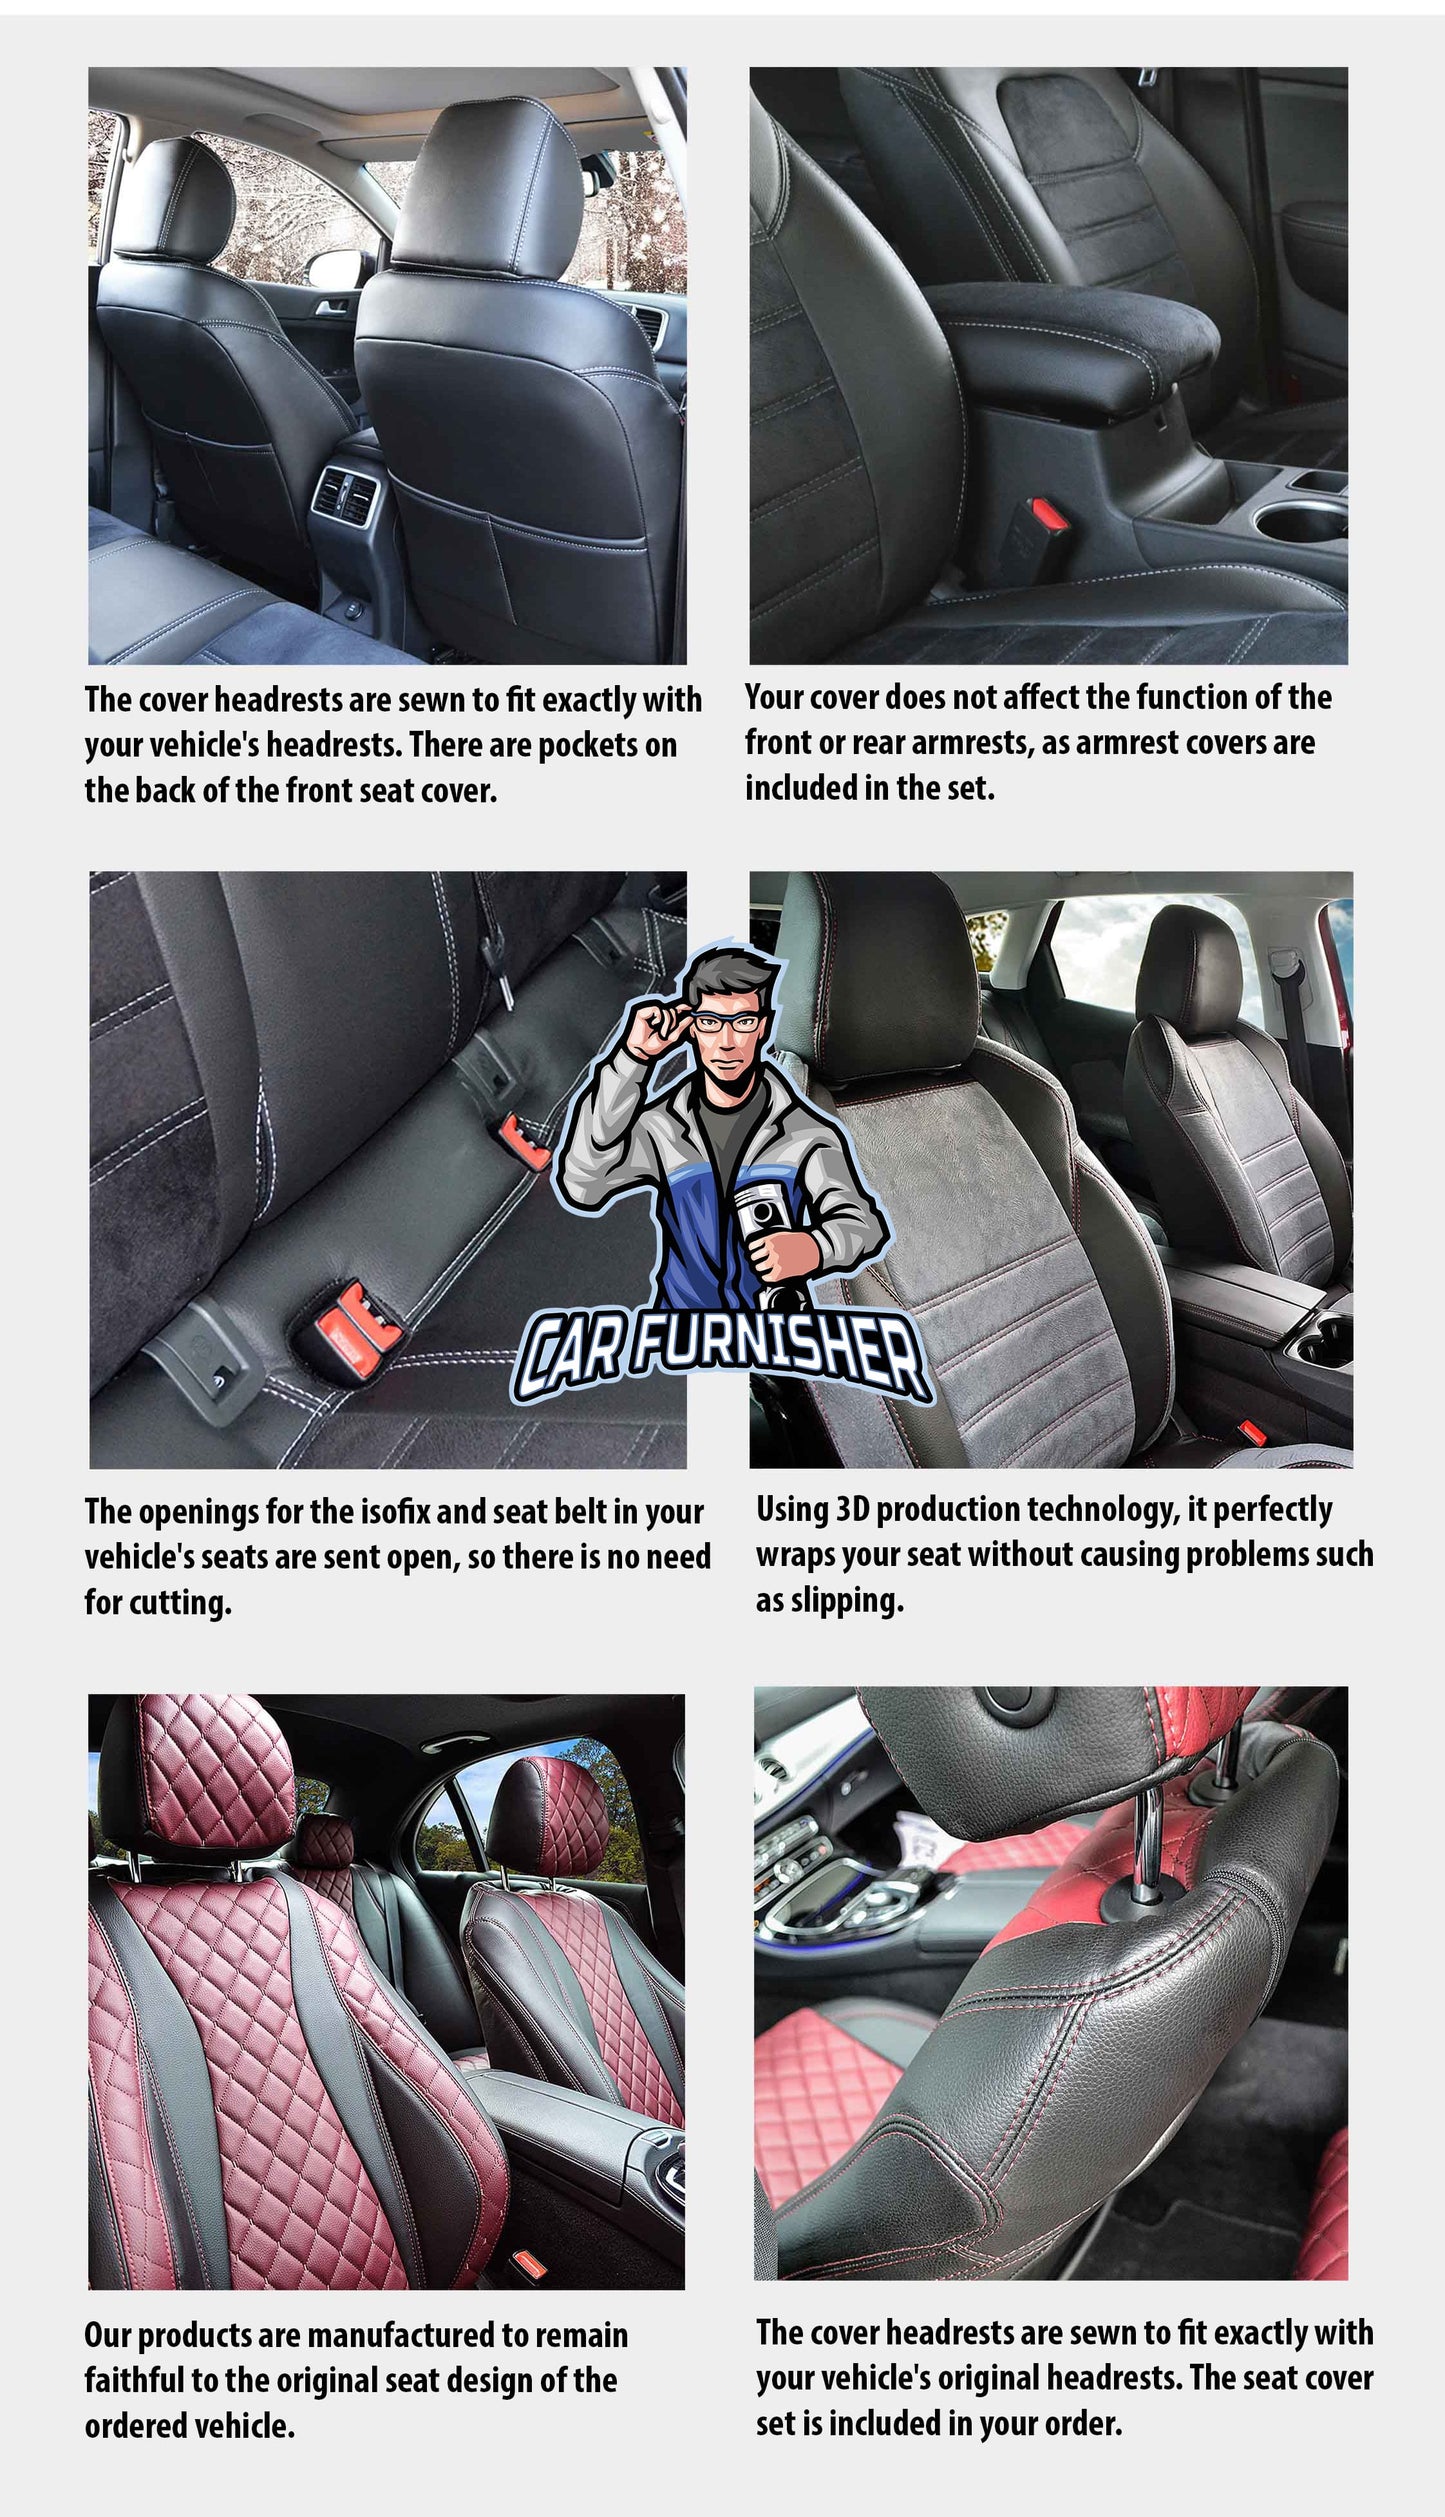 Nissan Micra Seat Covers Camouflage Waterproof Design Everest Camo Waterproof Fabric